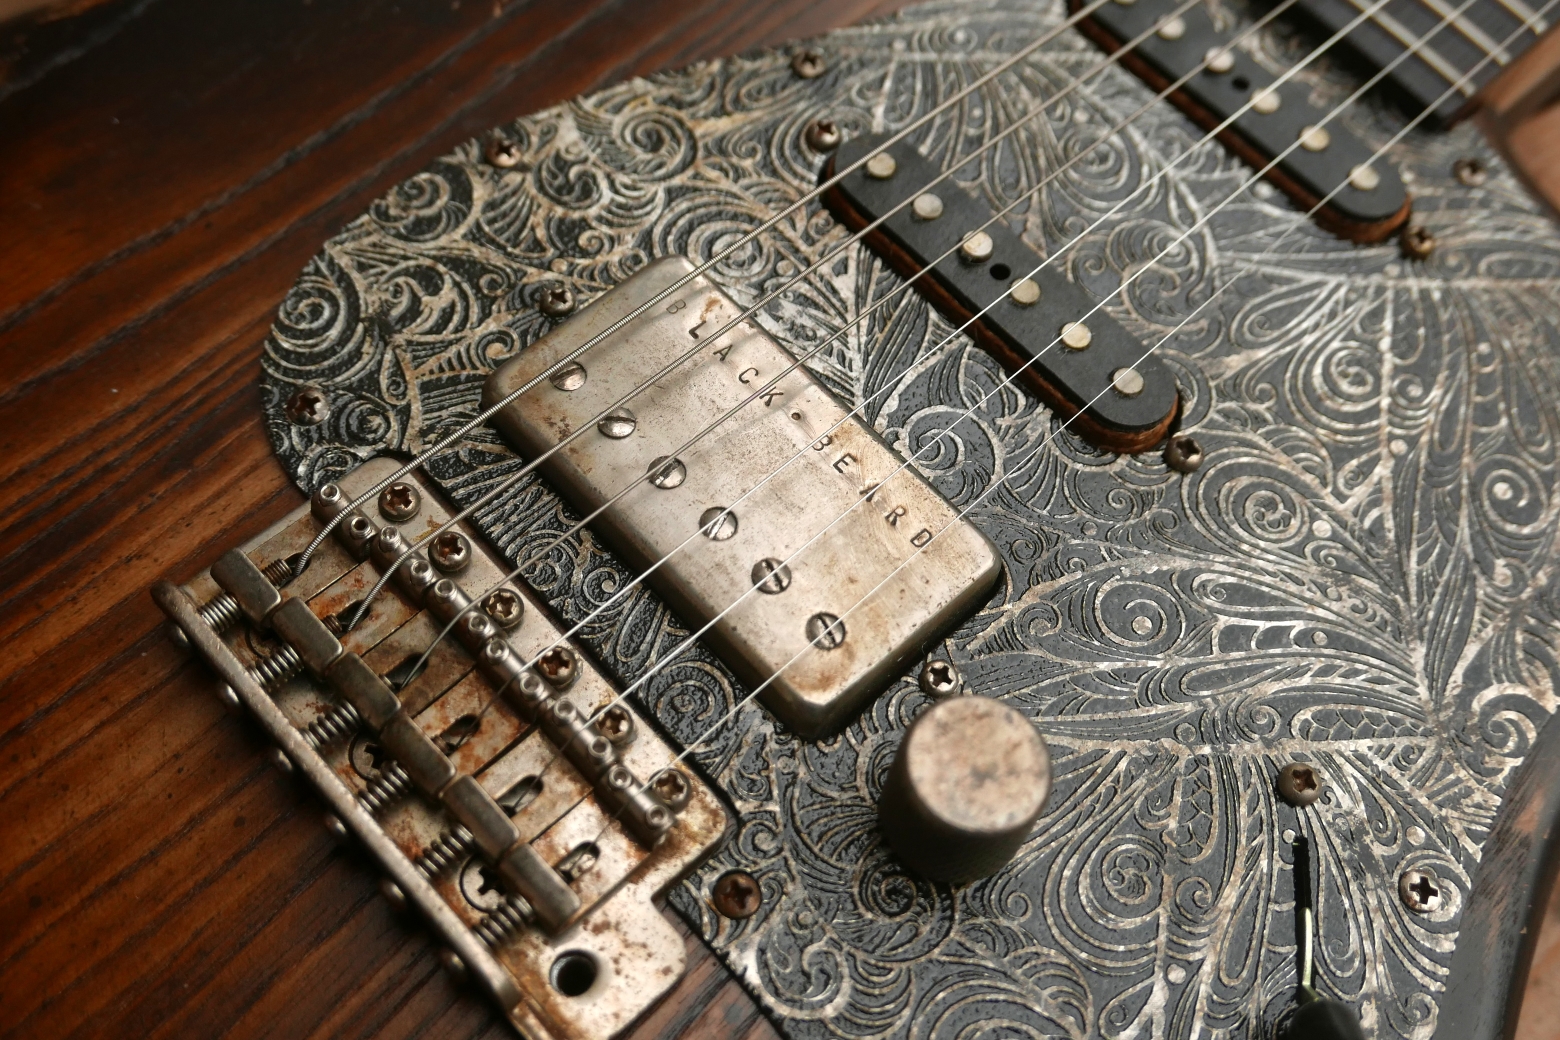 chitarra stratocaster ponte e pickups